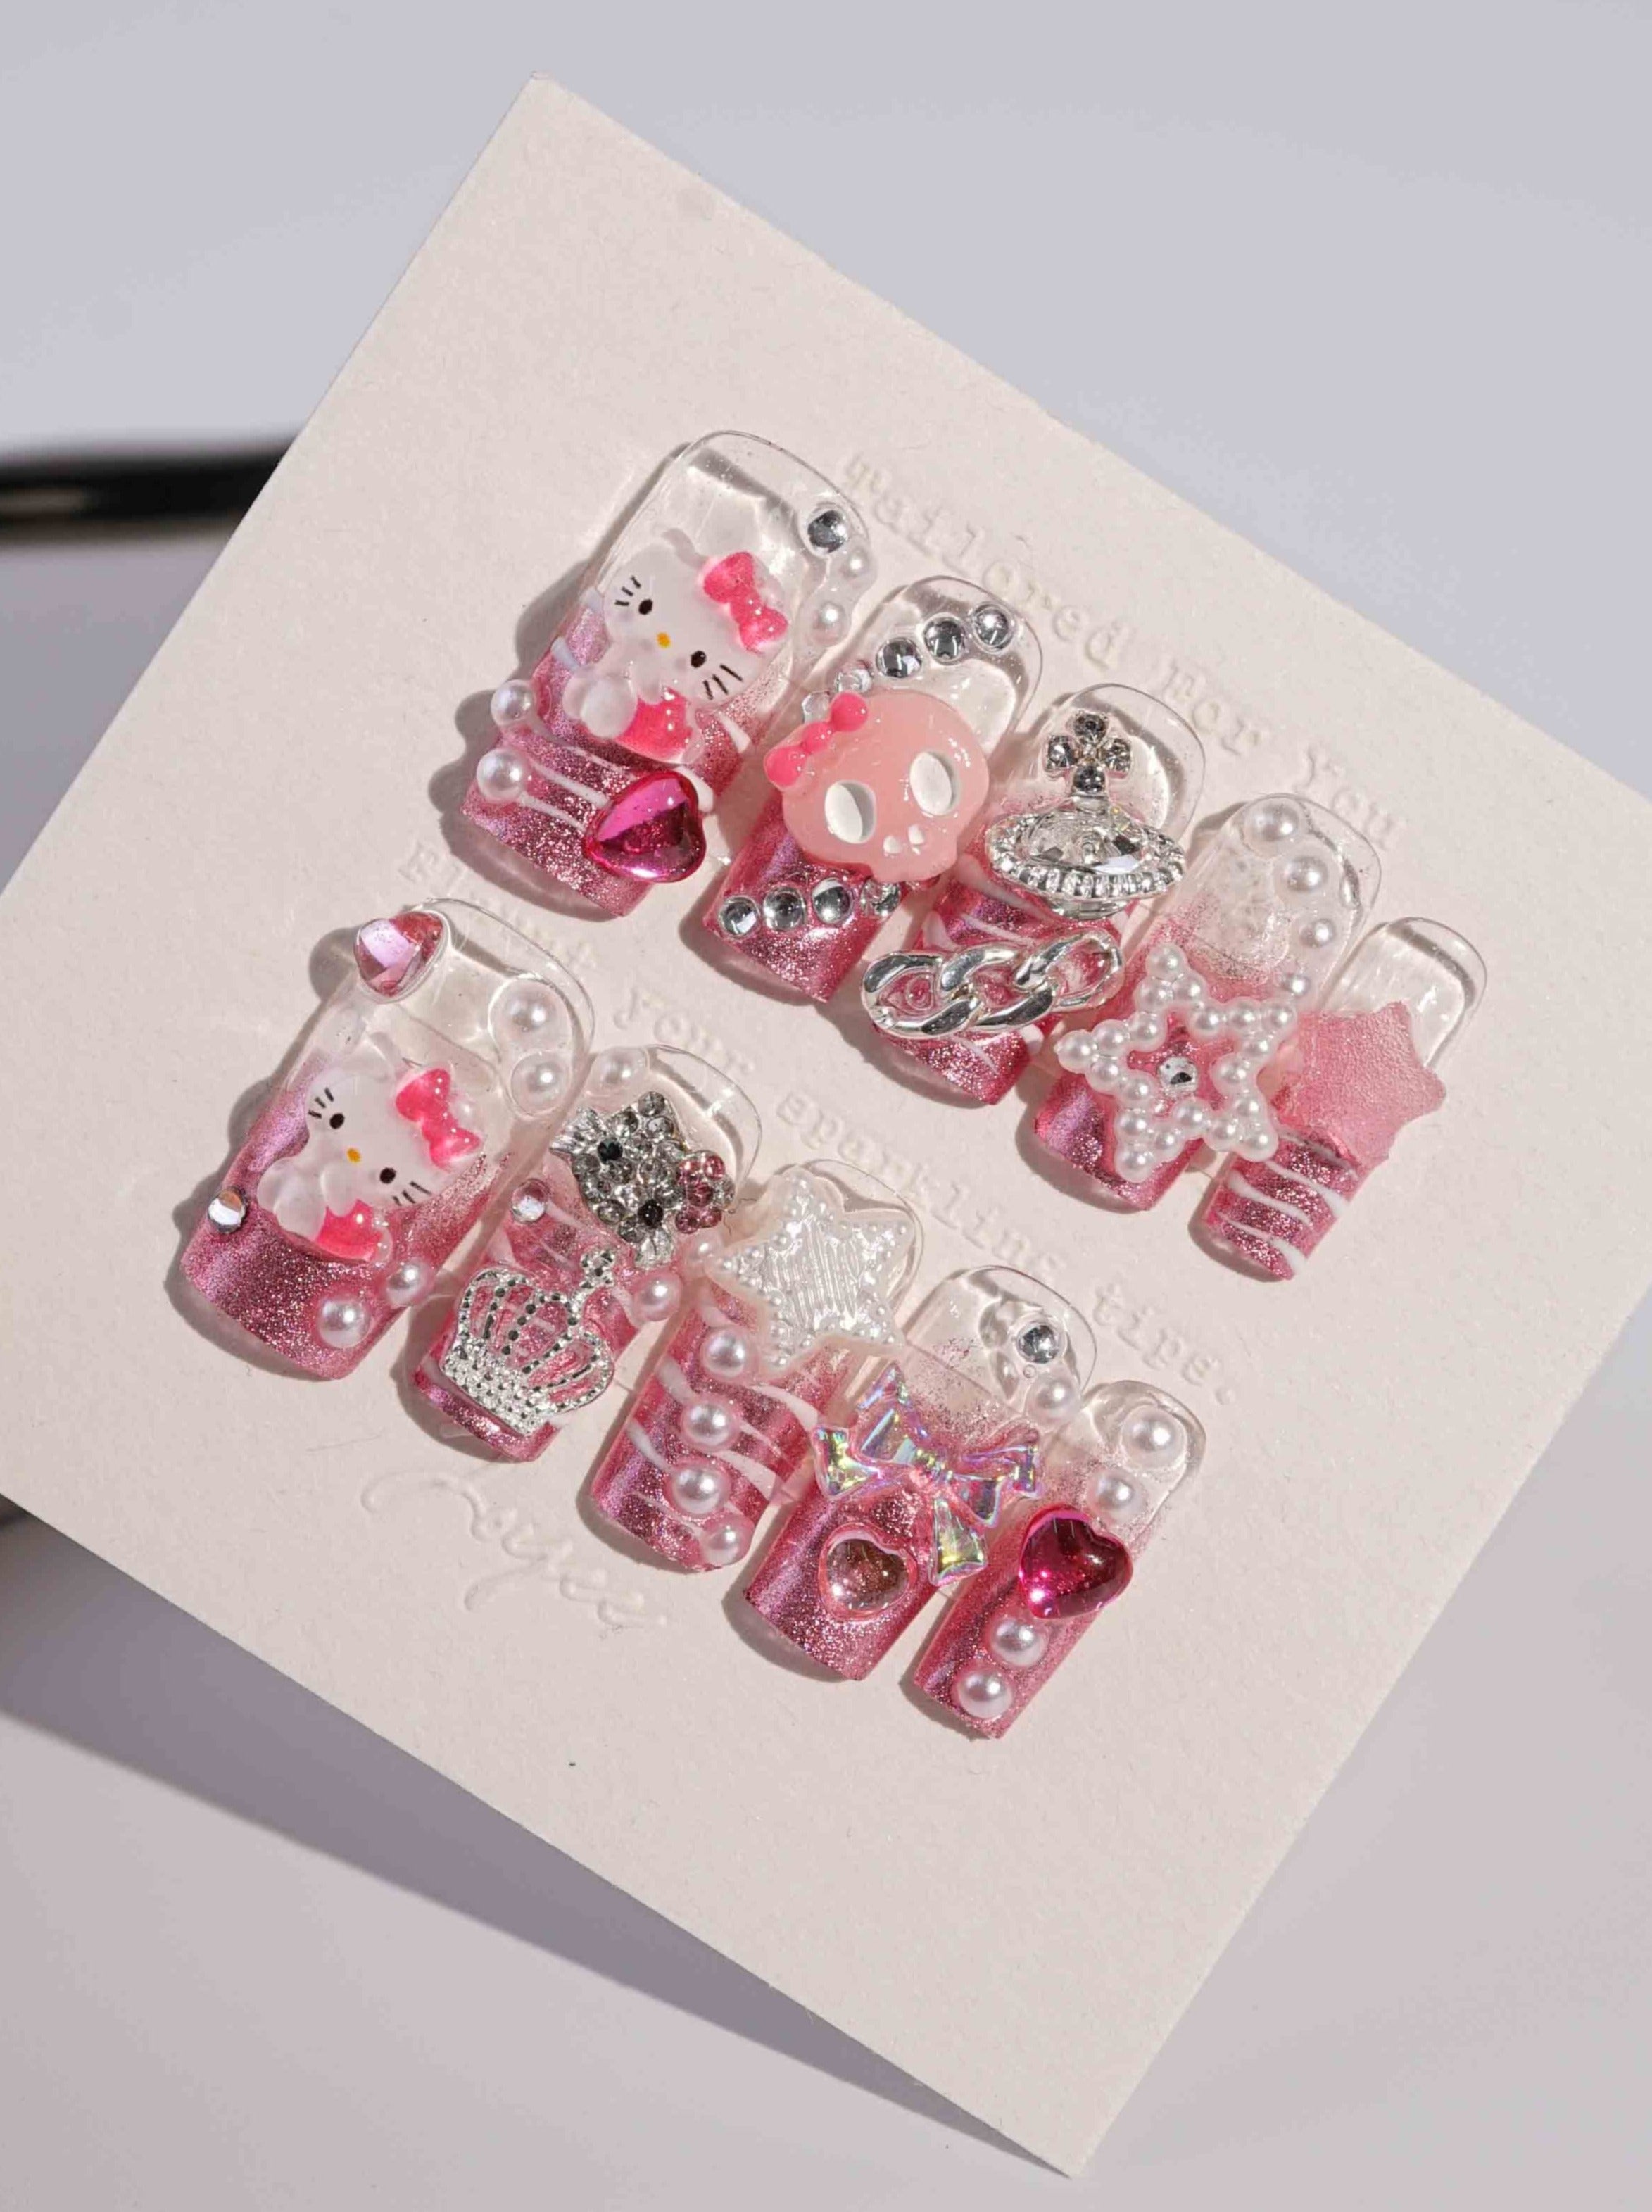 kitty-yolo-med-square-for-joyee-handmade-press-on-nails